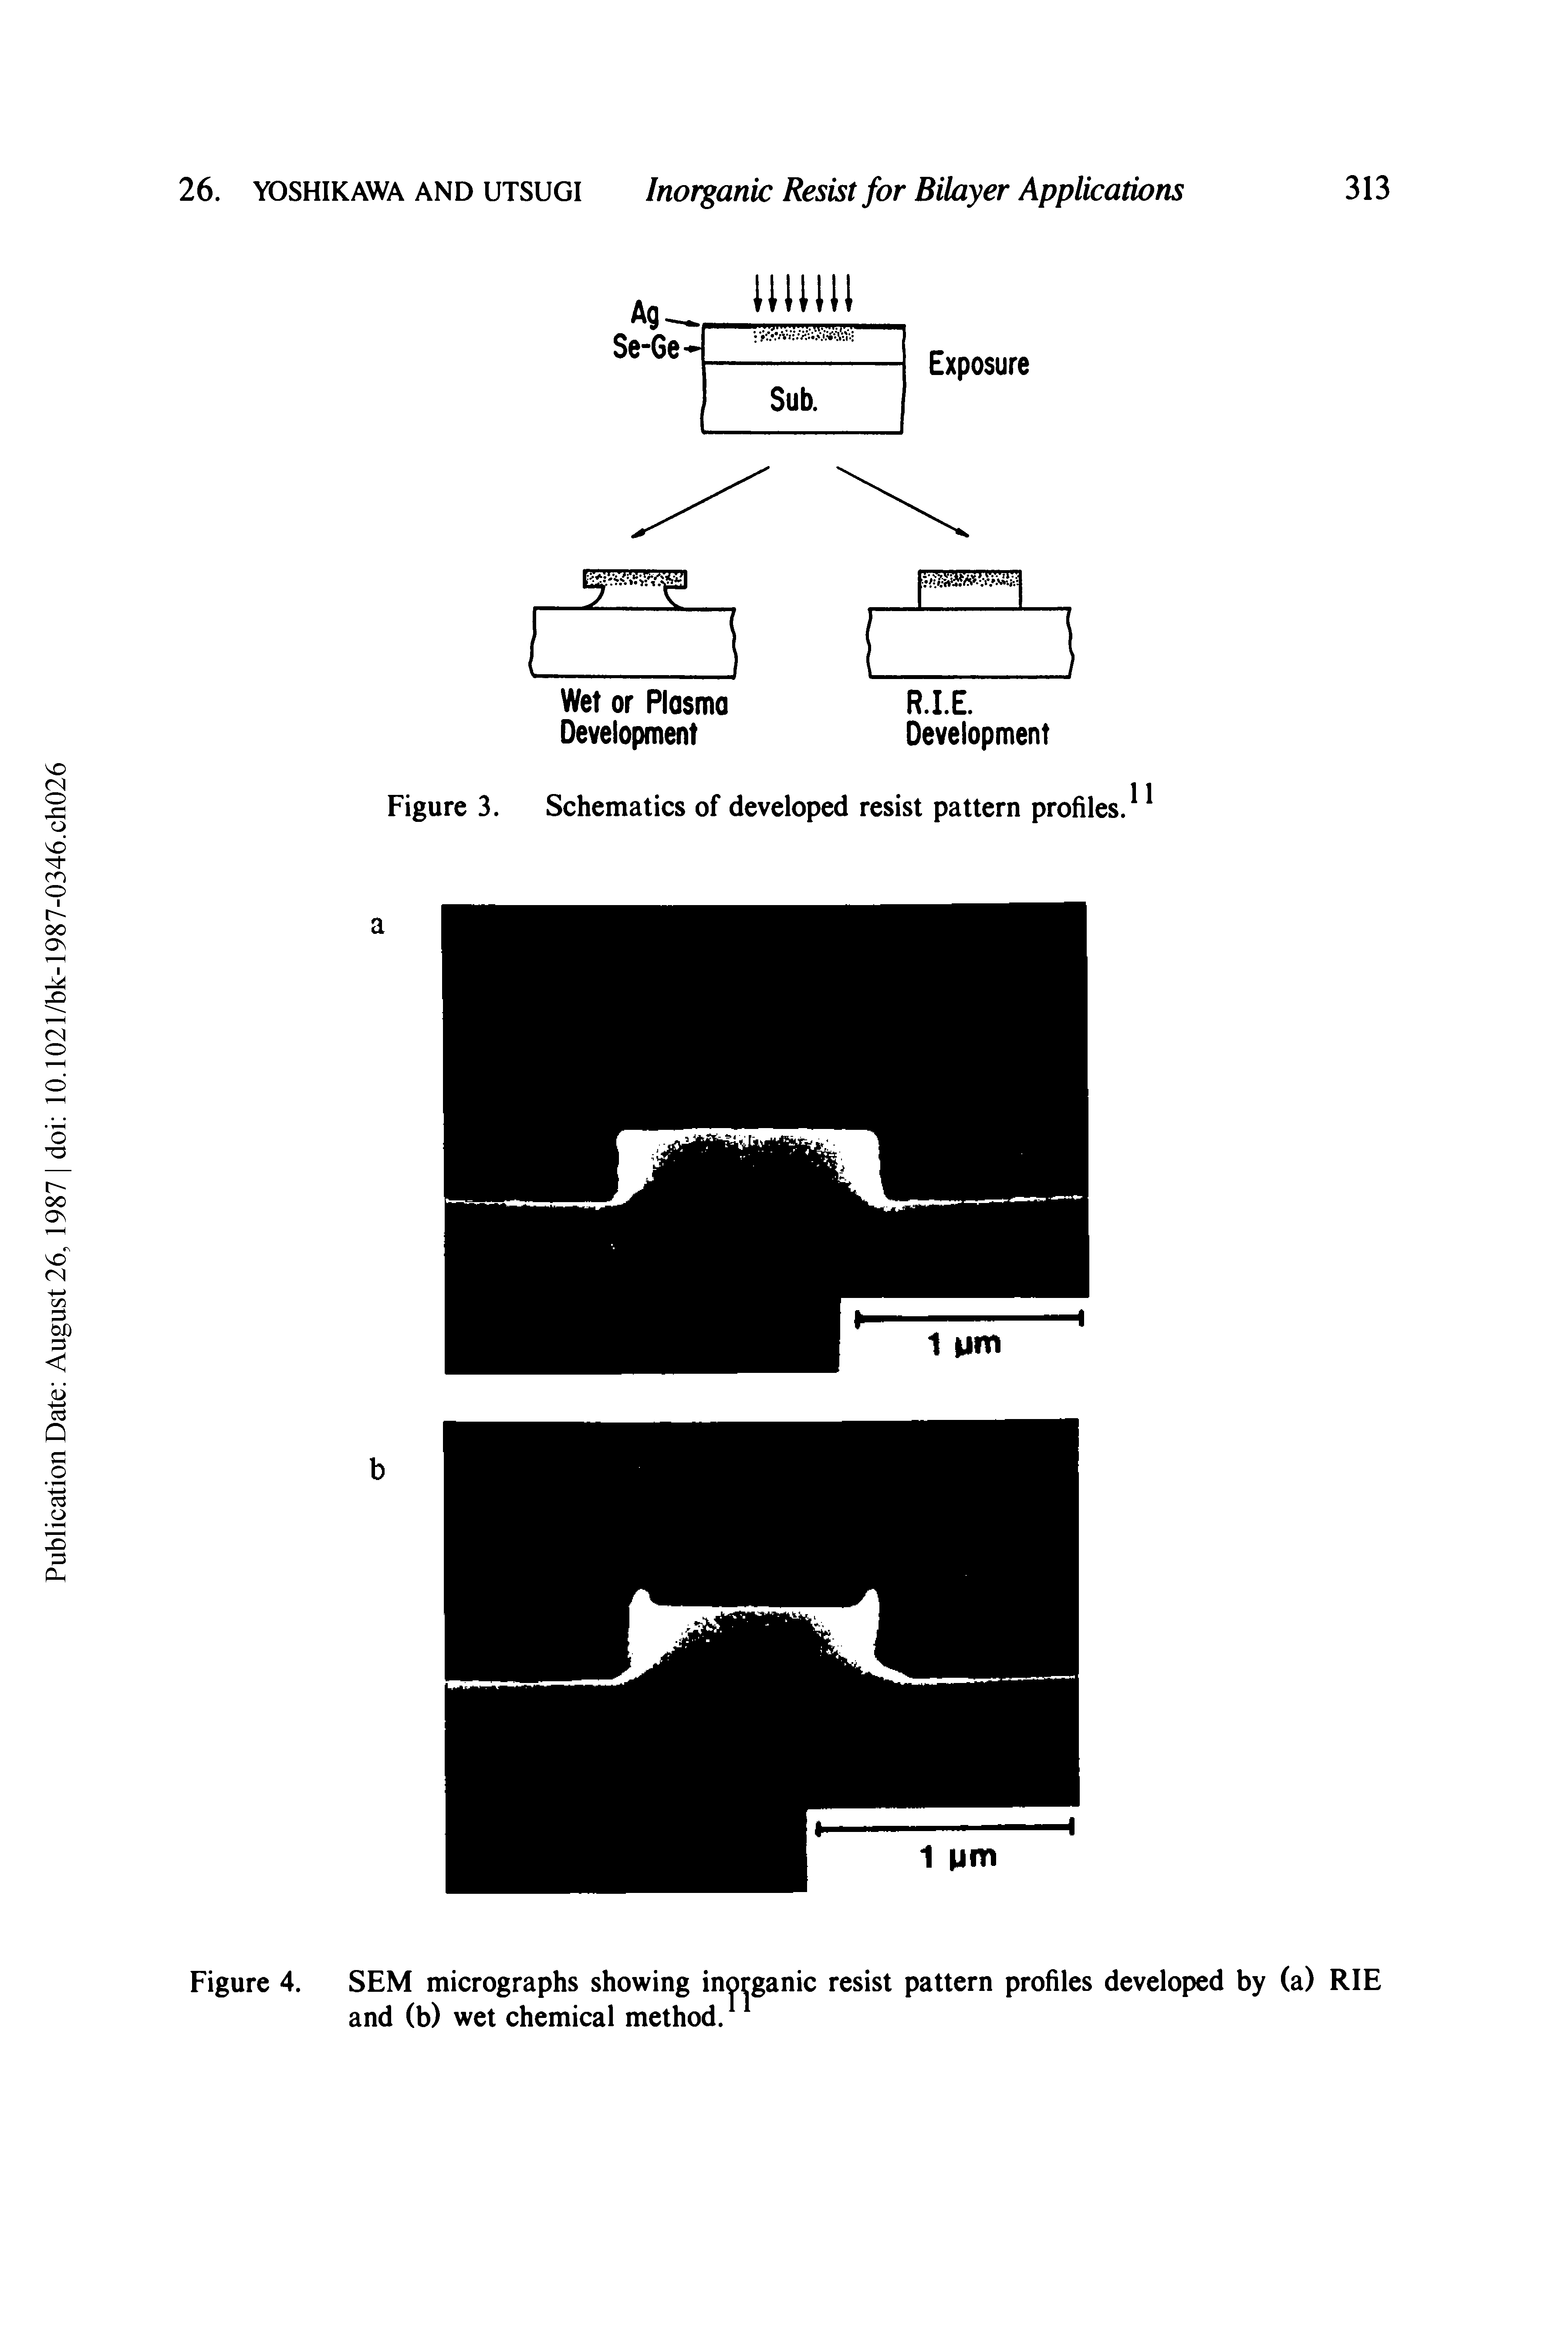 Figure 3. Schematics of developed resist pattern profiles.